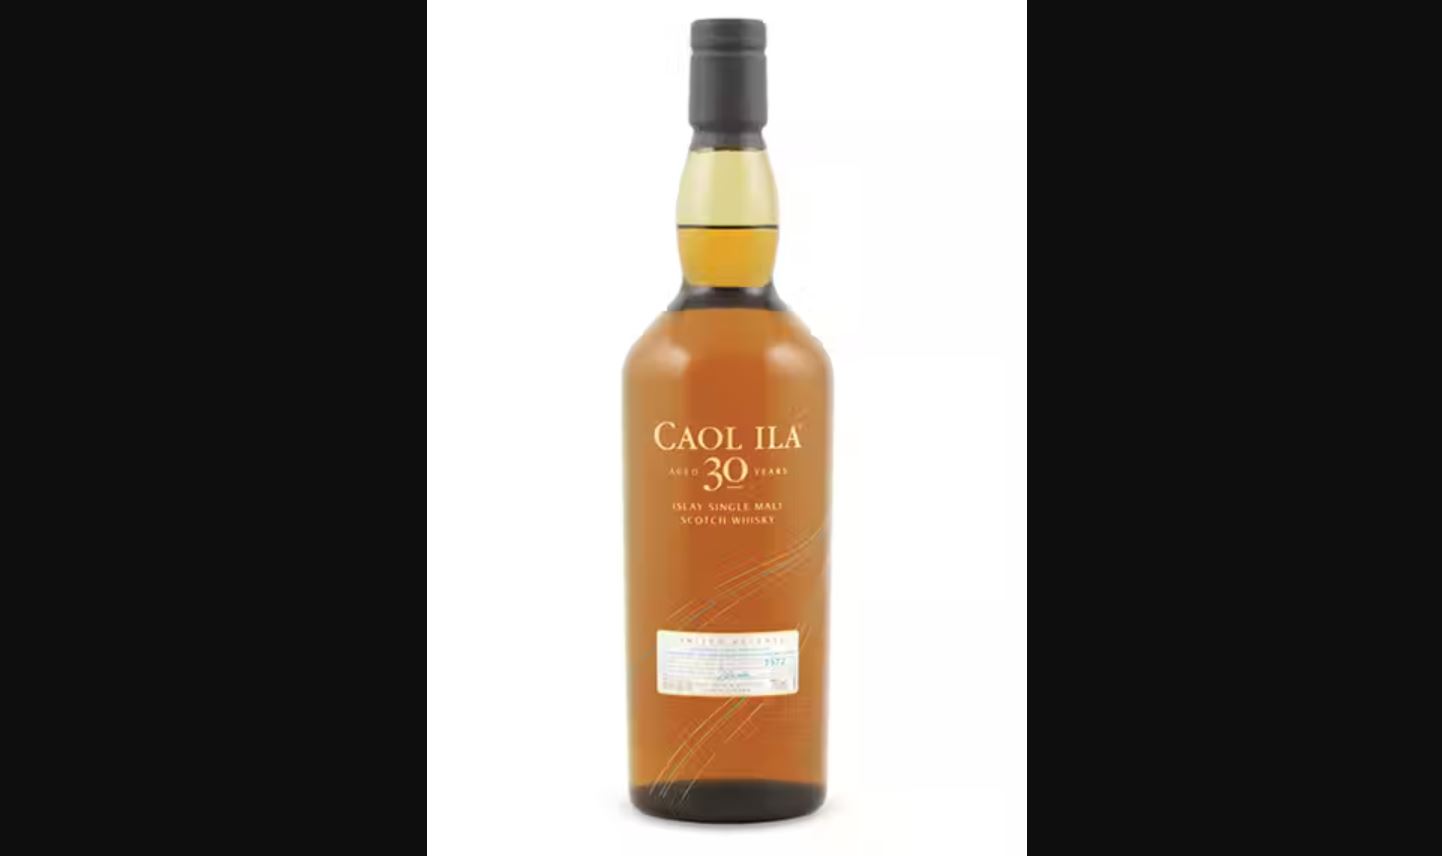 Caol Ila 30 Single Malt Scotch Whisky